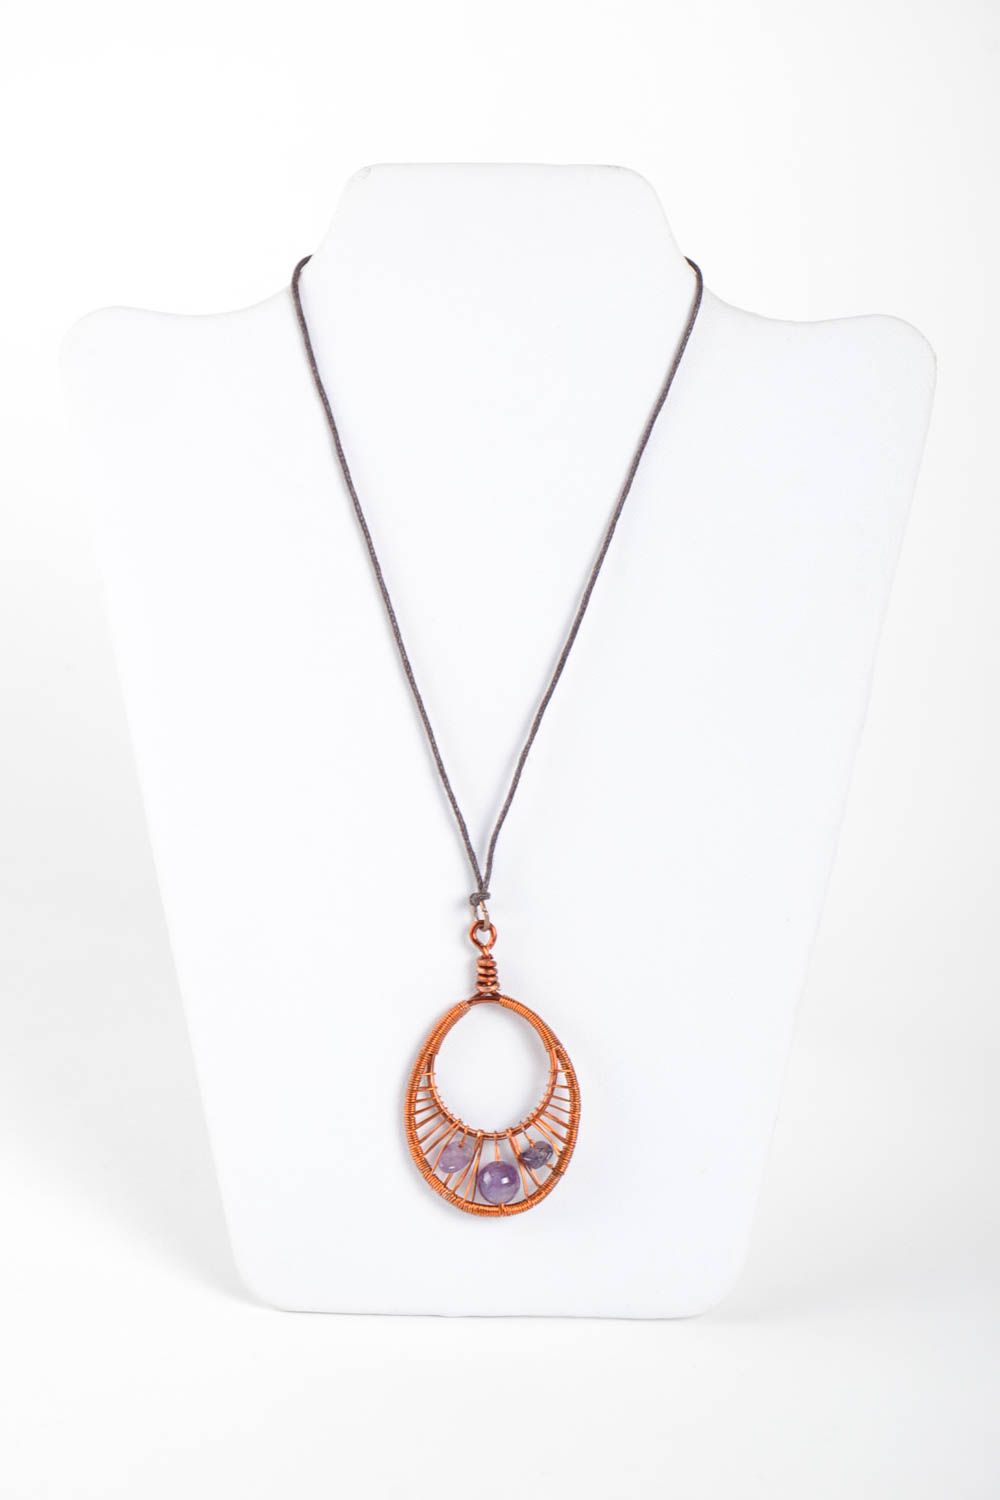 Stylish pendant handmade beautiful accessory feminine designer jewelry photo 2